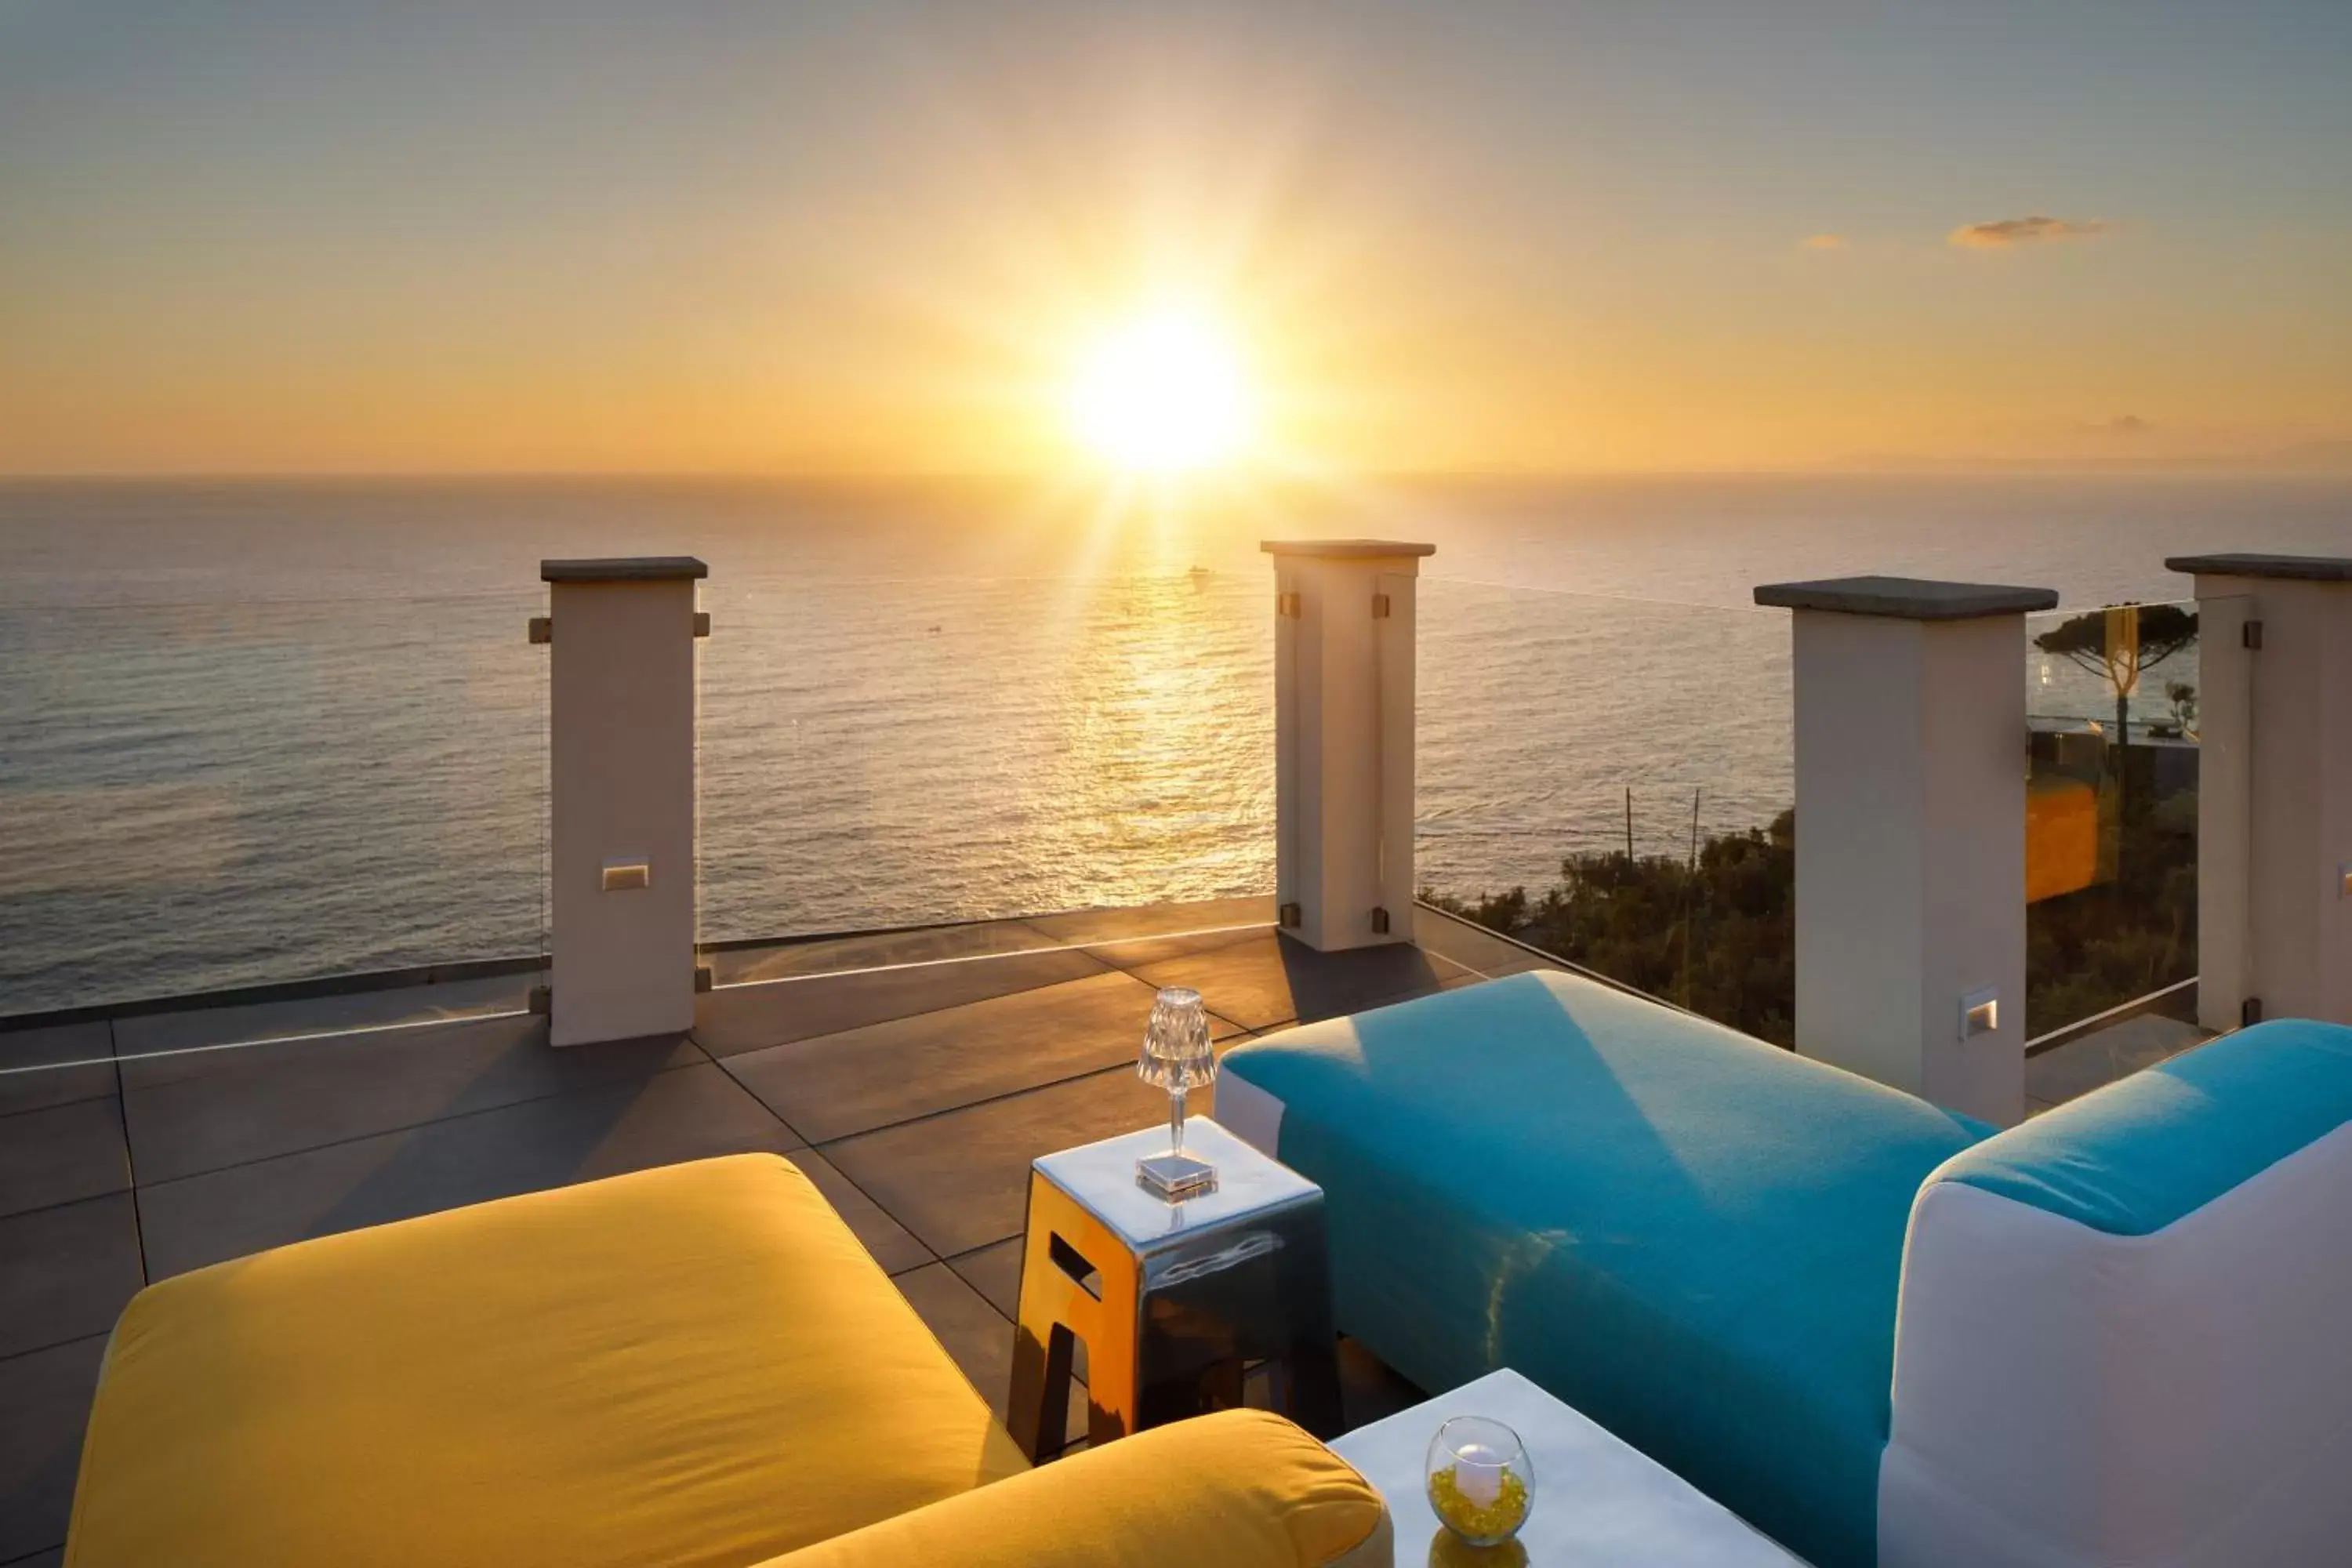 Summer, Sunrise/Sunset in Villa Fiorella Art Hotel